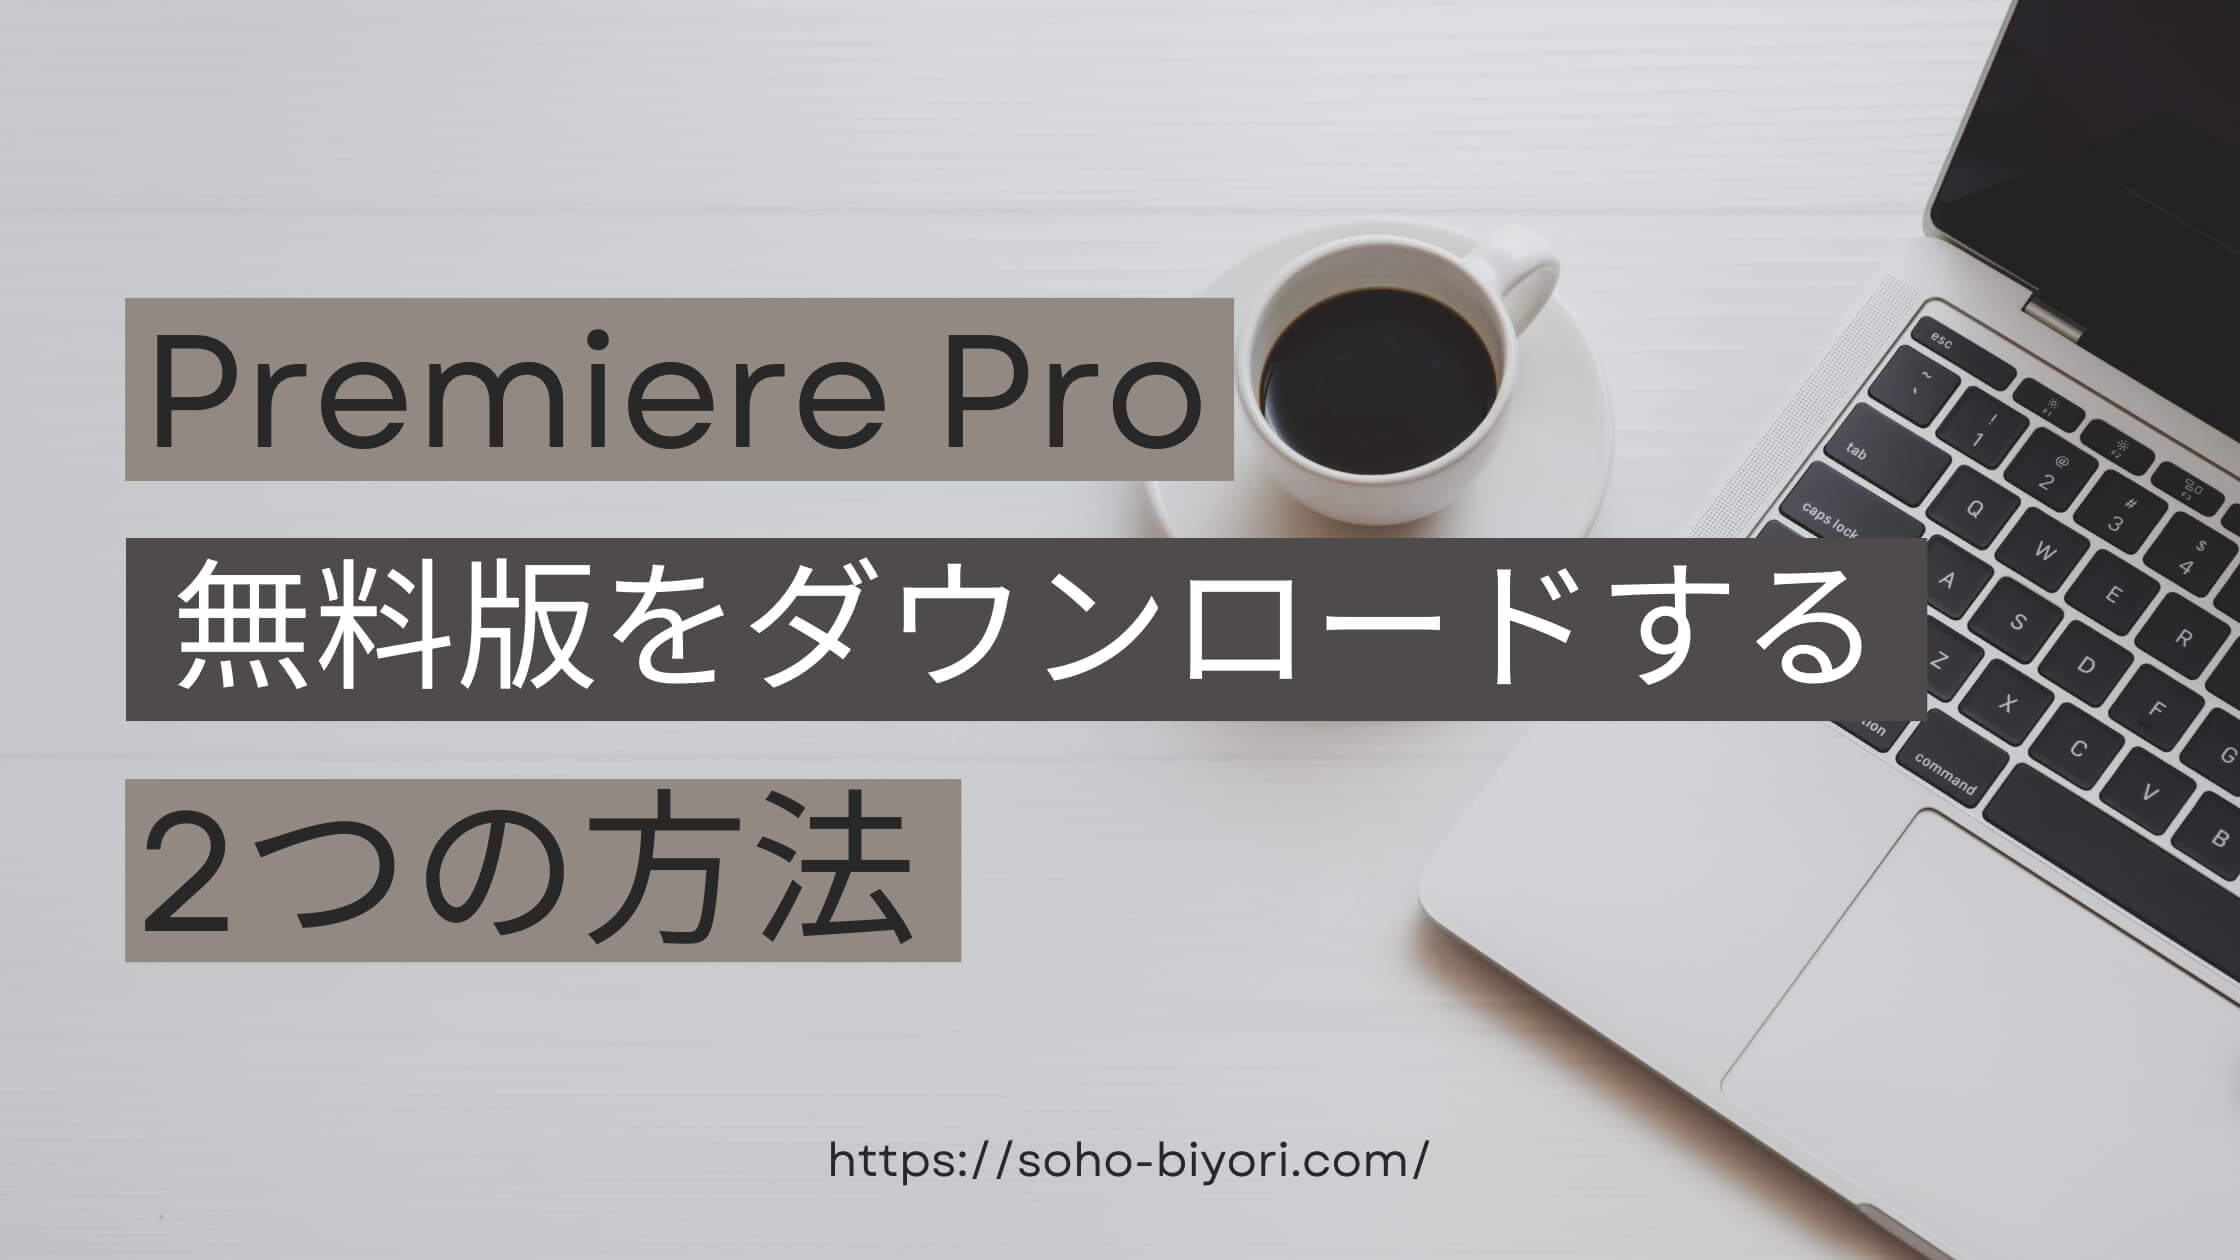 Adobe Premiere Proの無料版をダウンロードする2つの方法